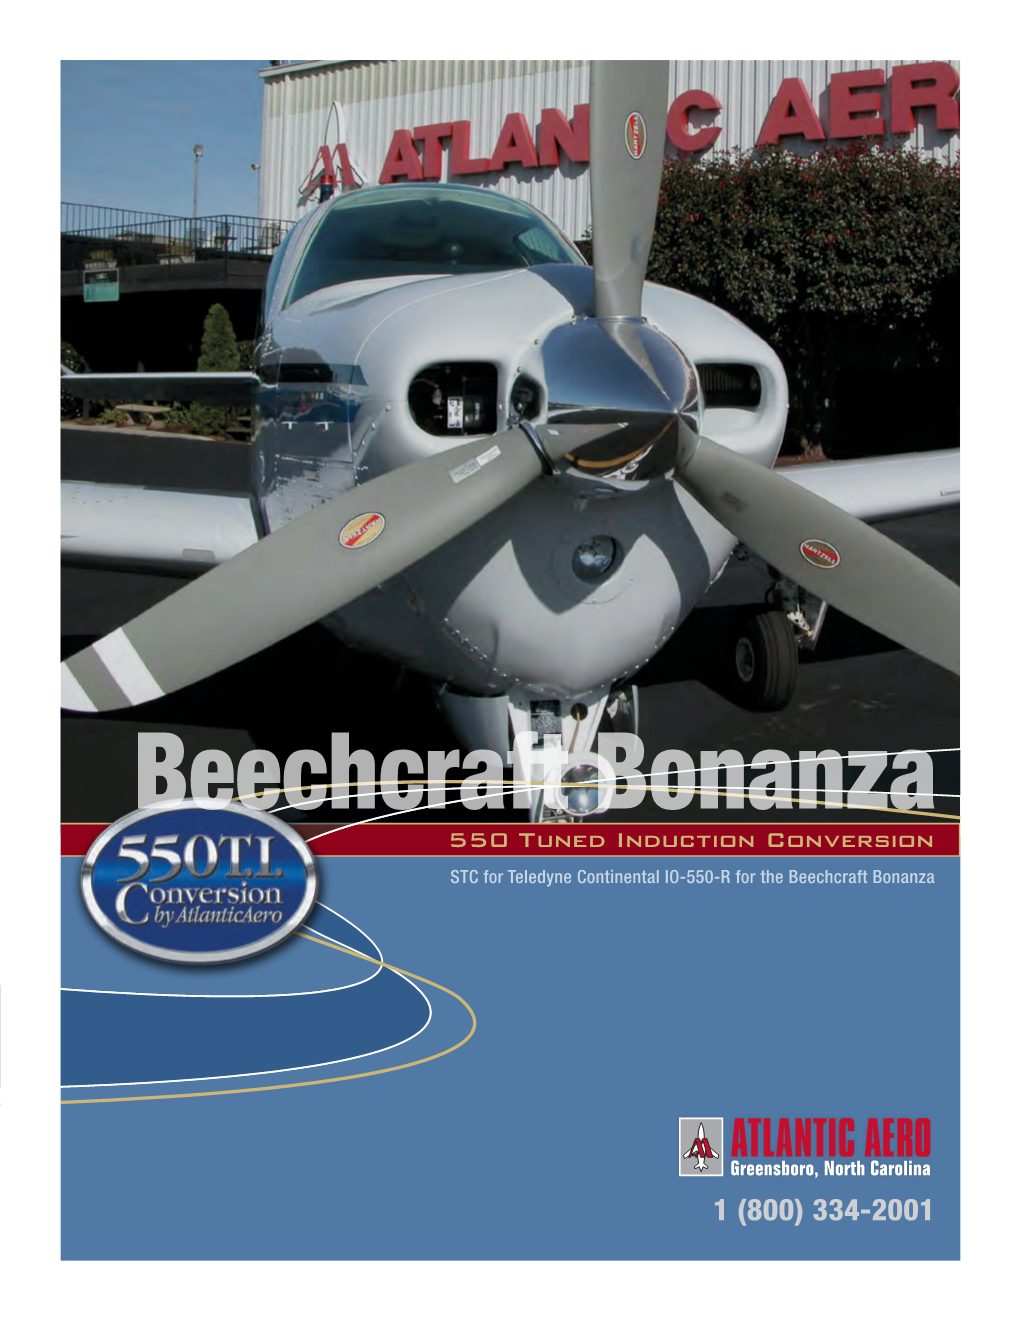 Beechcraft Bonanza 550 Tuned Induction Conversion STC for Teledyne Continental IO-550-R for the Beechcraft Bonanza